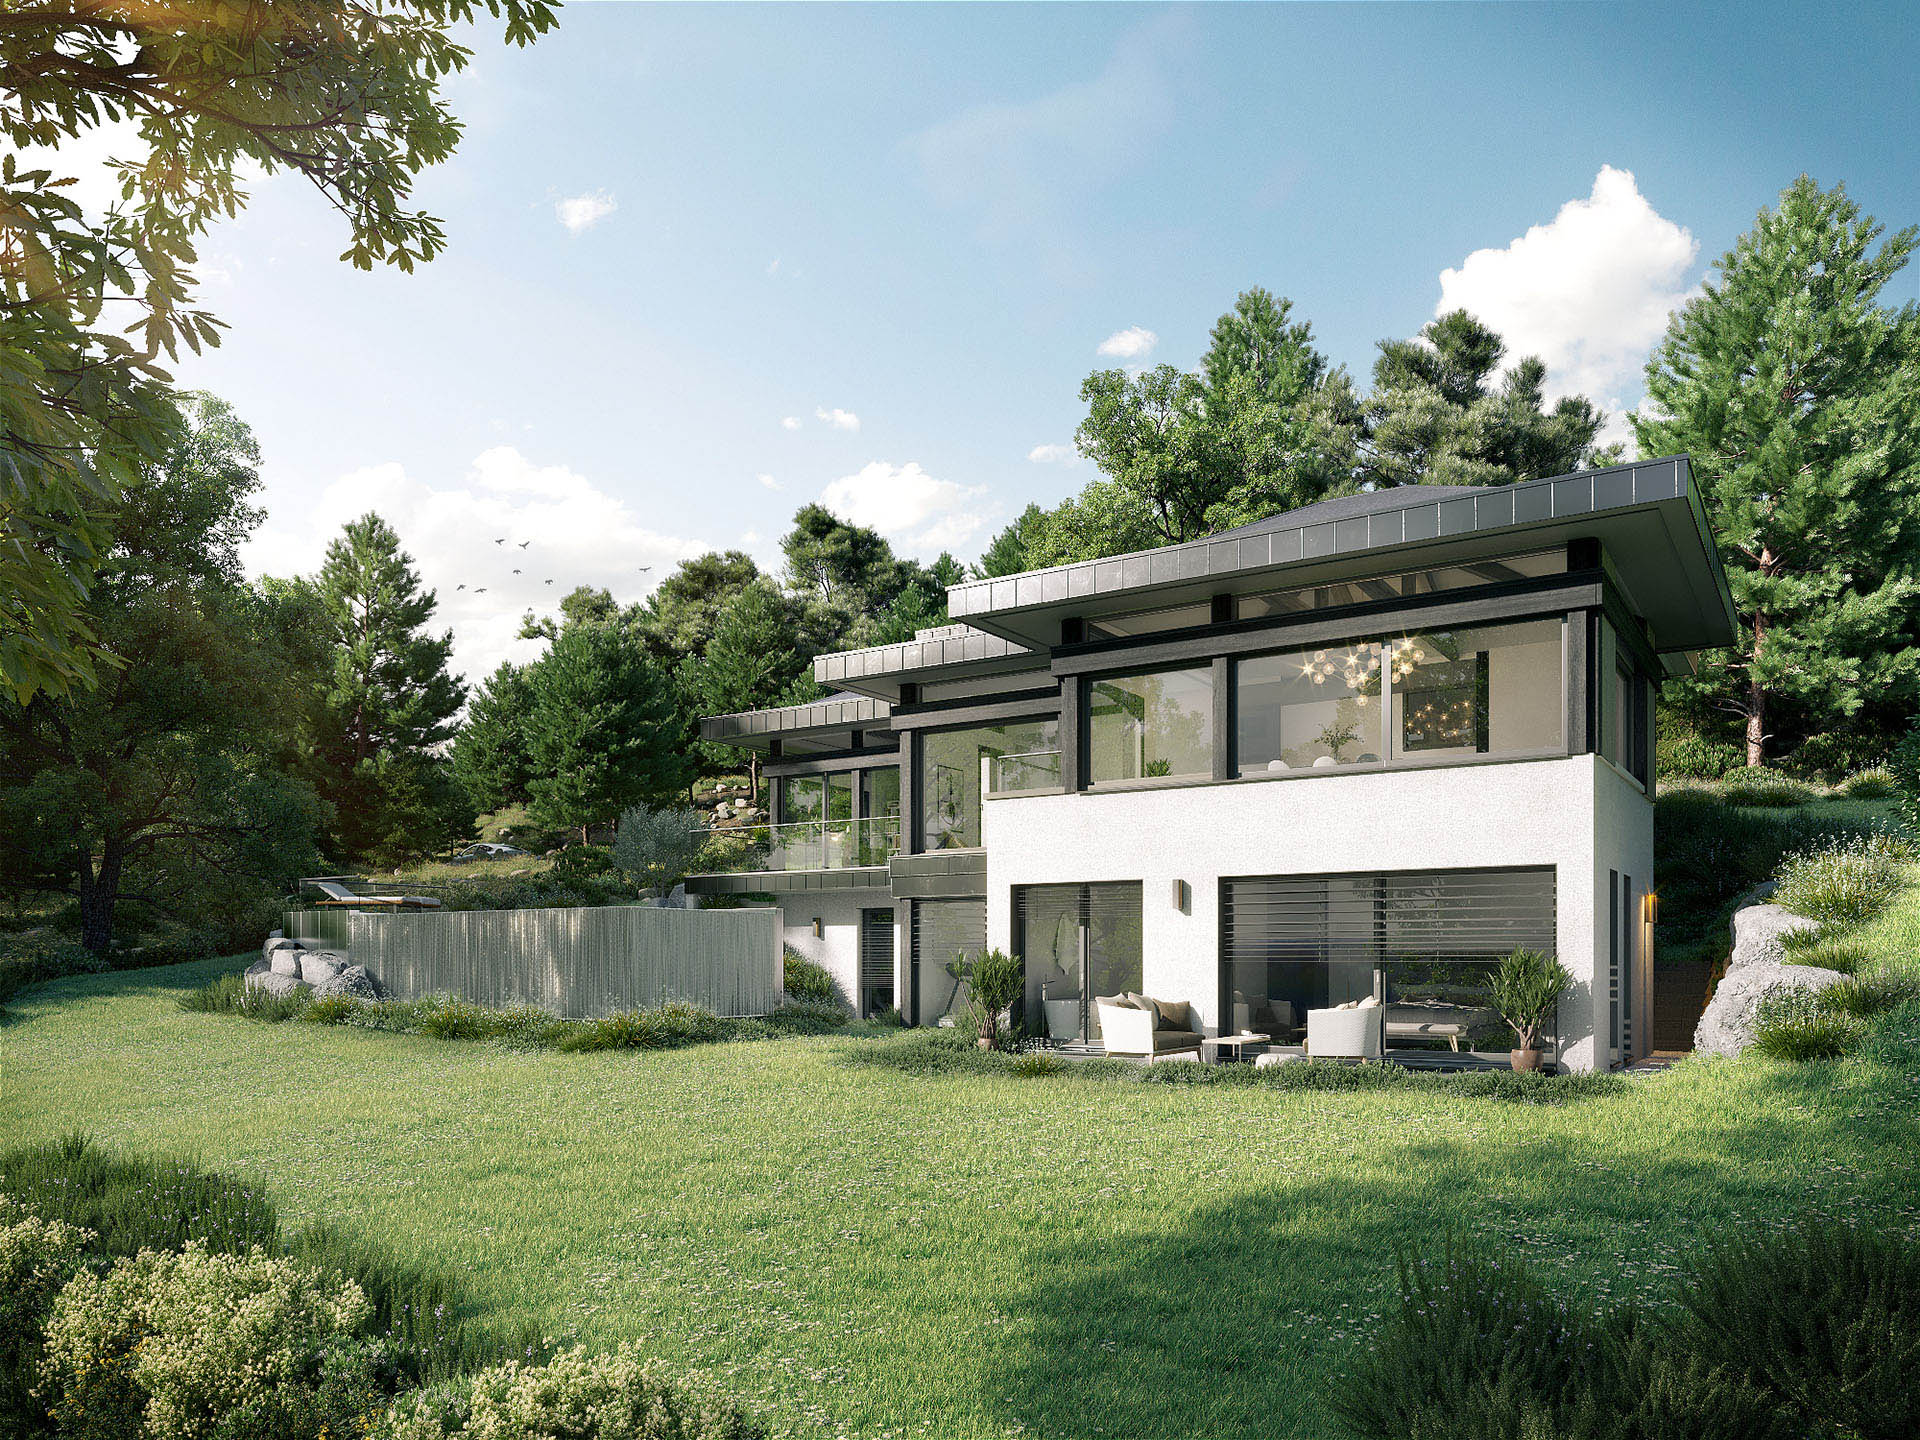 3D representation of a luxurious contemporary house